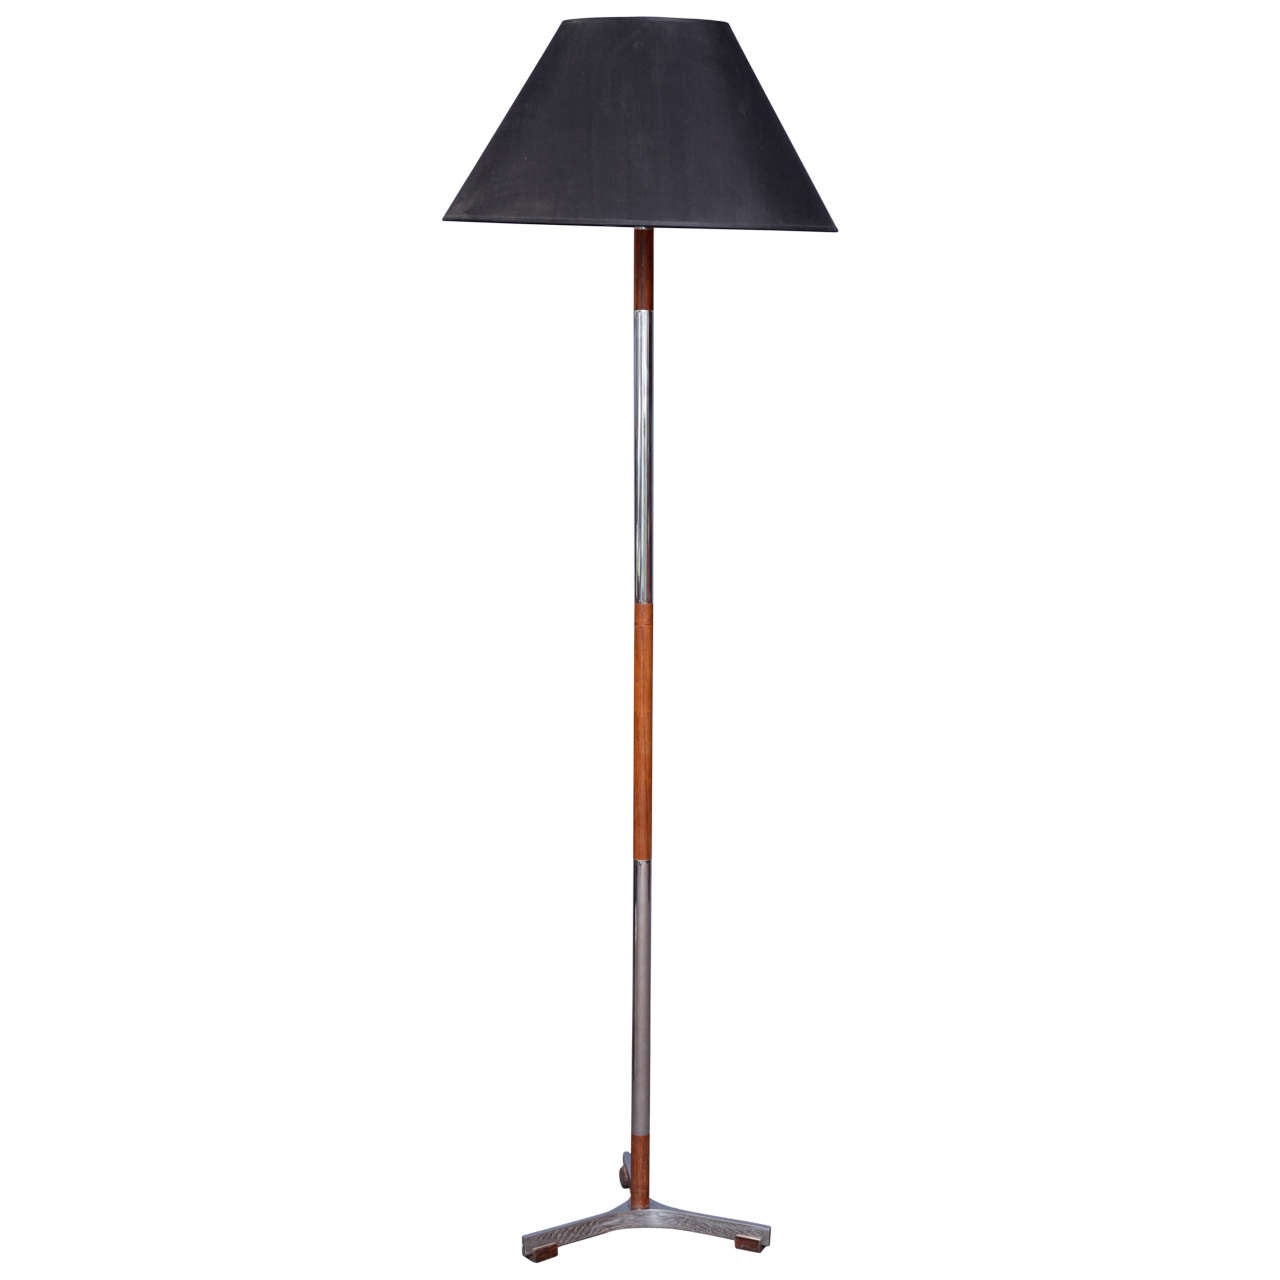 Italian Origin Floor Lamp